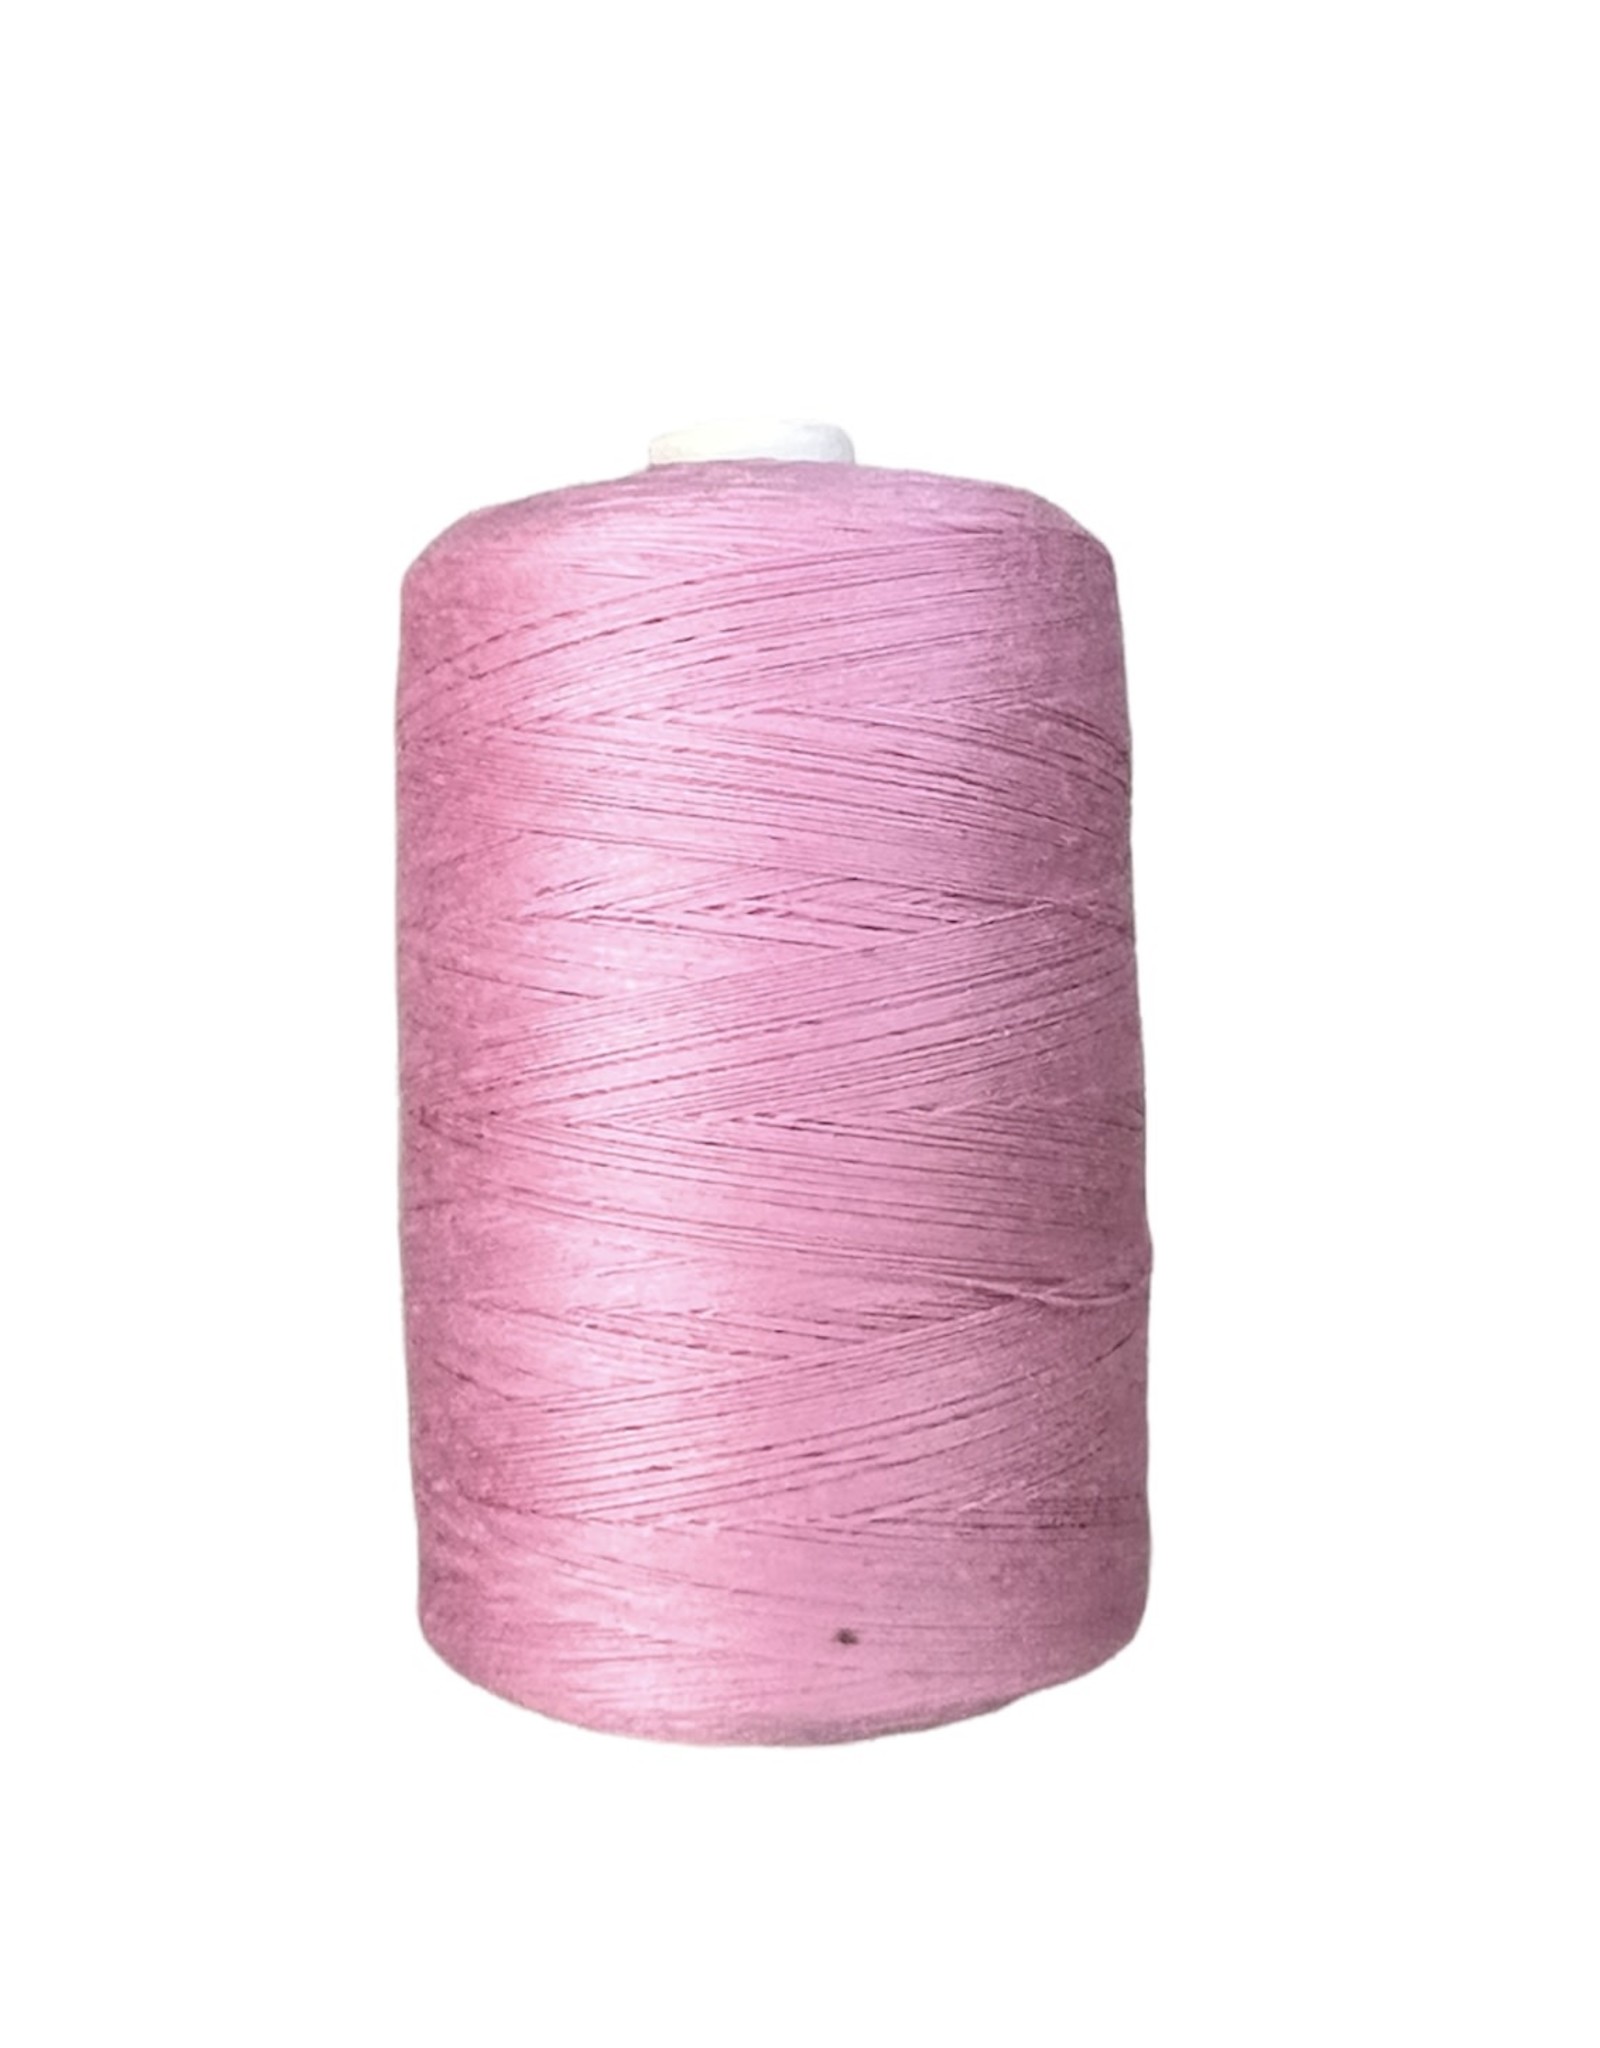 Cotton 50wt - 1500m - Pink 52